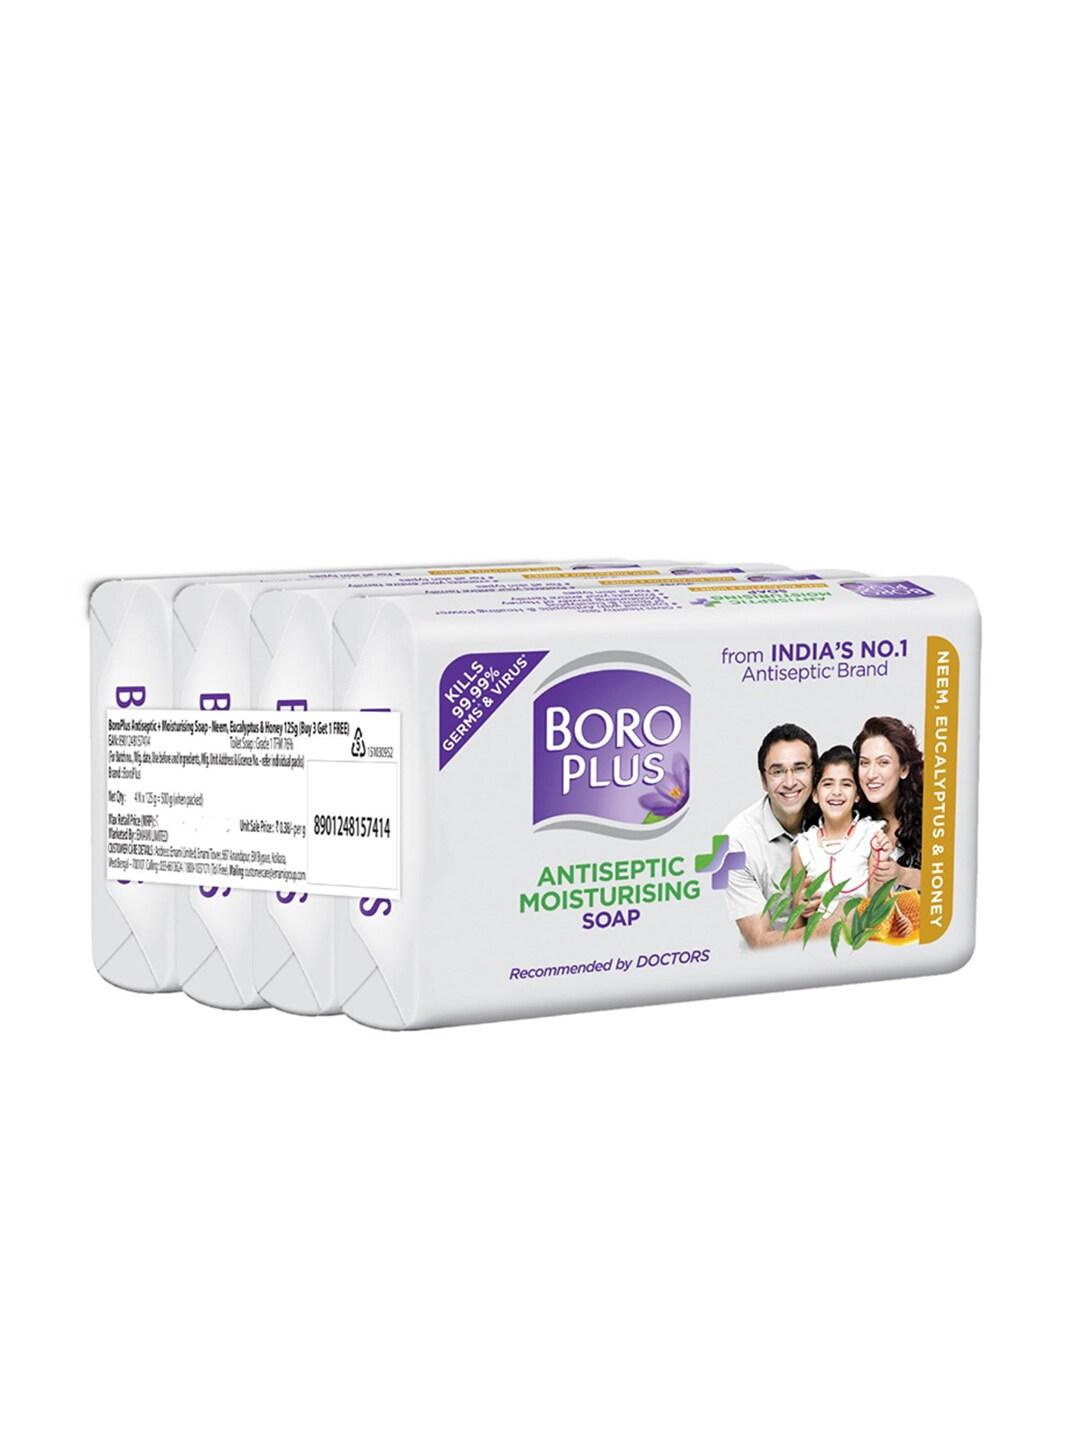 BOROPLUS Antiseptic Moisturising Soap with Eucalyptus & Honey 125g Each - Buy 3 get 1 Free